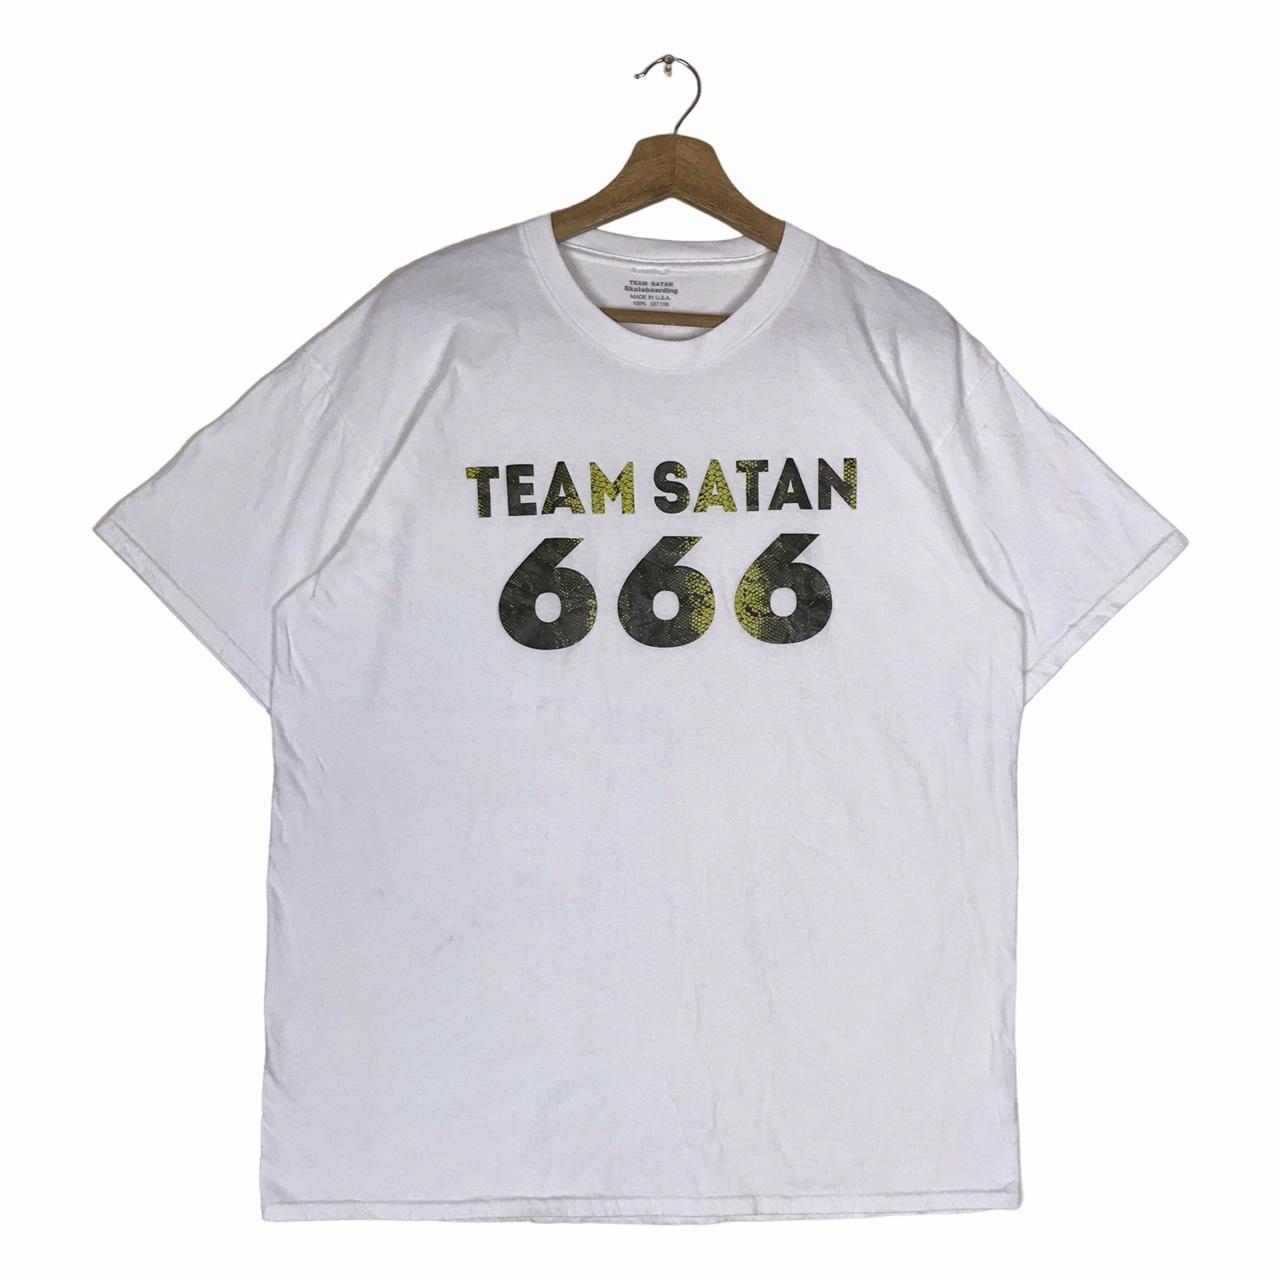 Team Satan 666 Skateboarding Tee